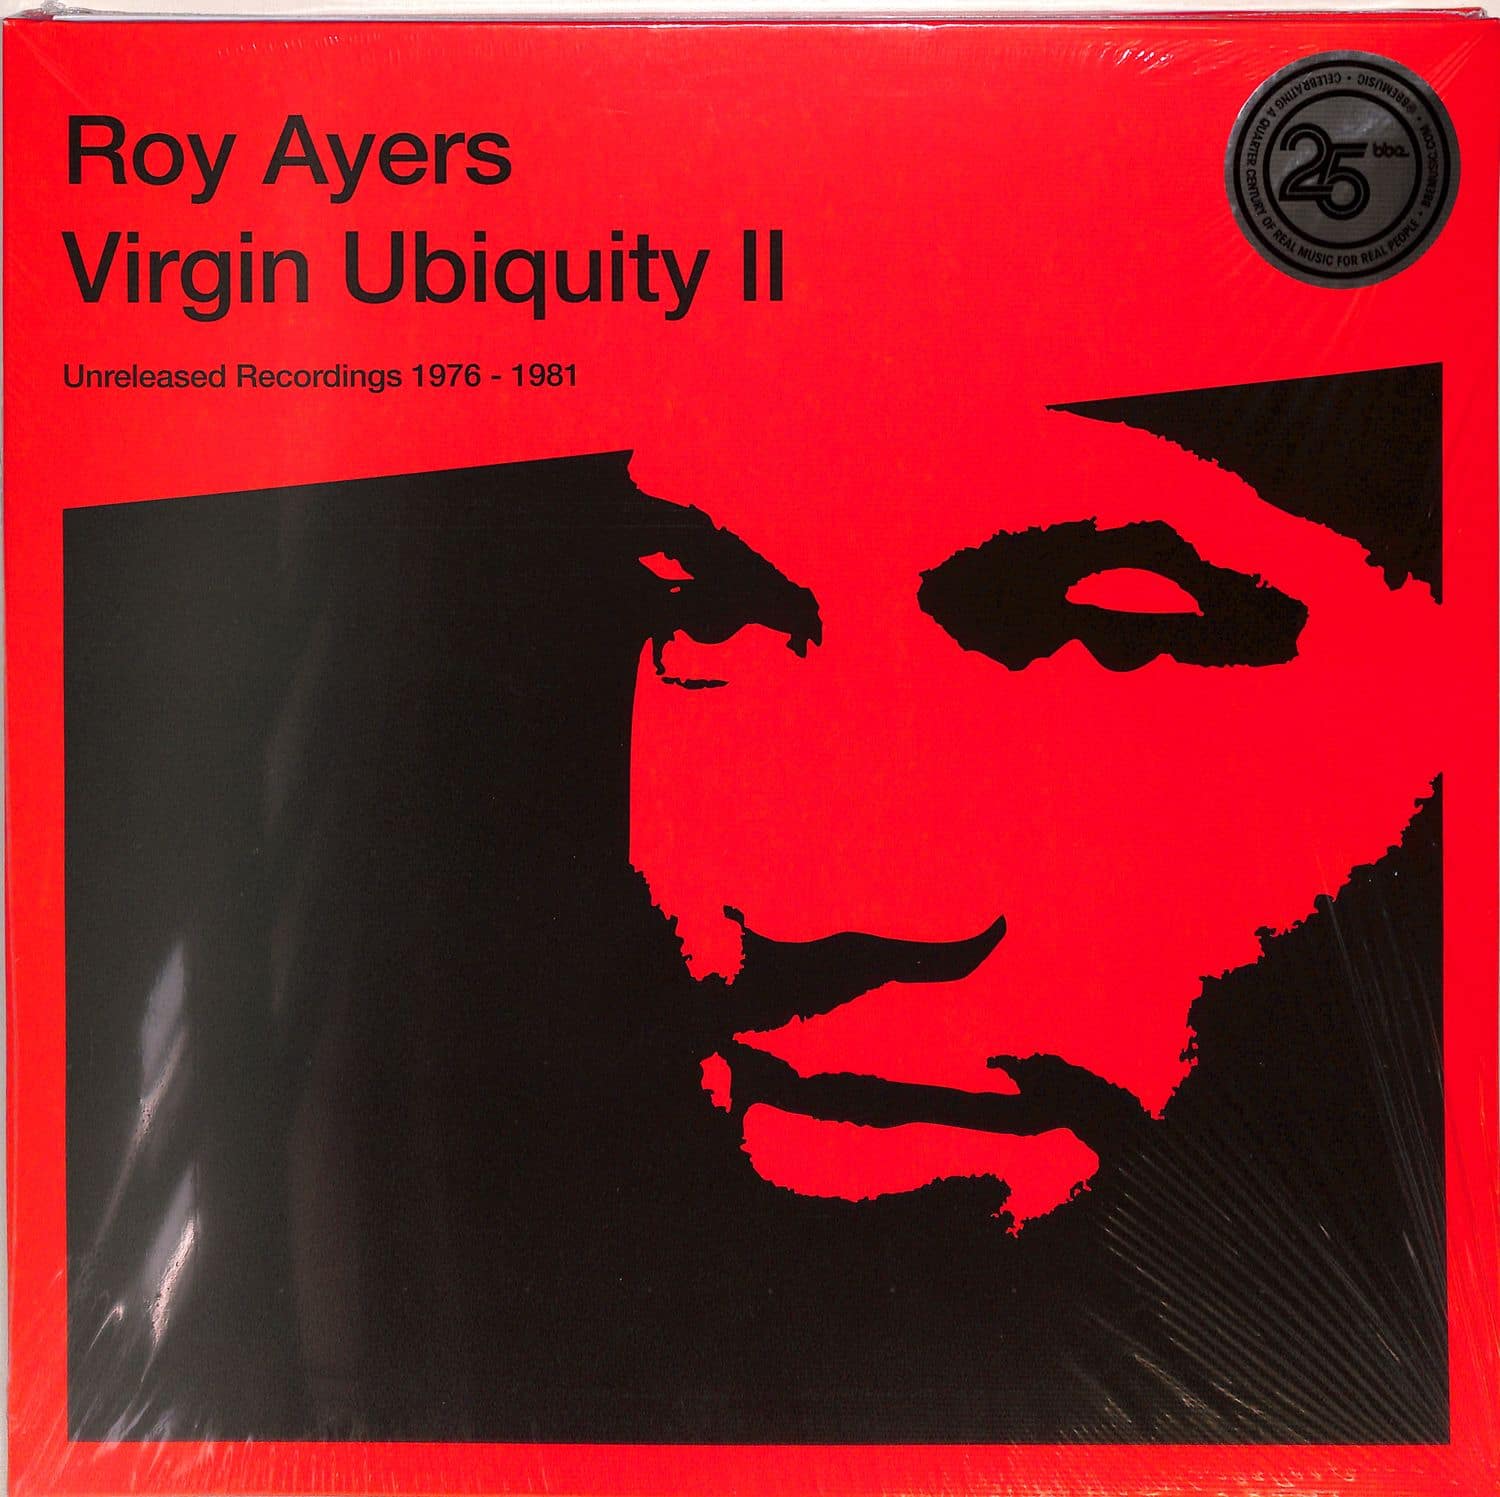 Roy Ayers - VIRGIN UBIQUITY II - UNRELEASED RECORDINGS 1976 - 1981 